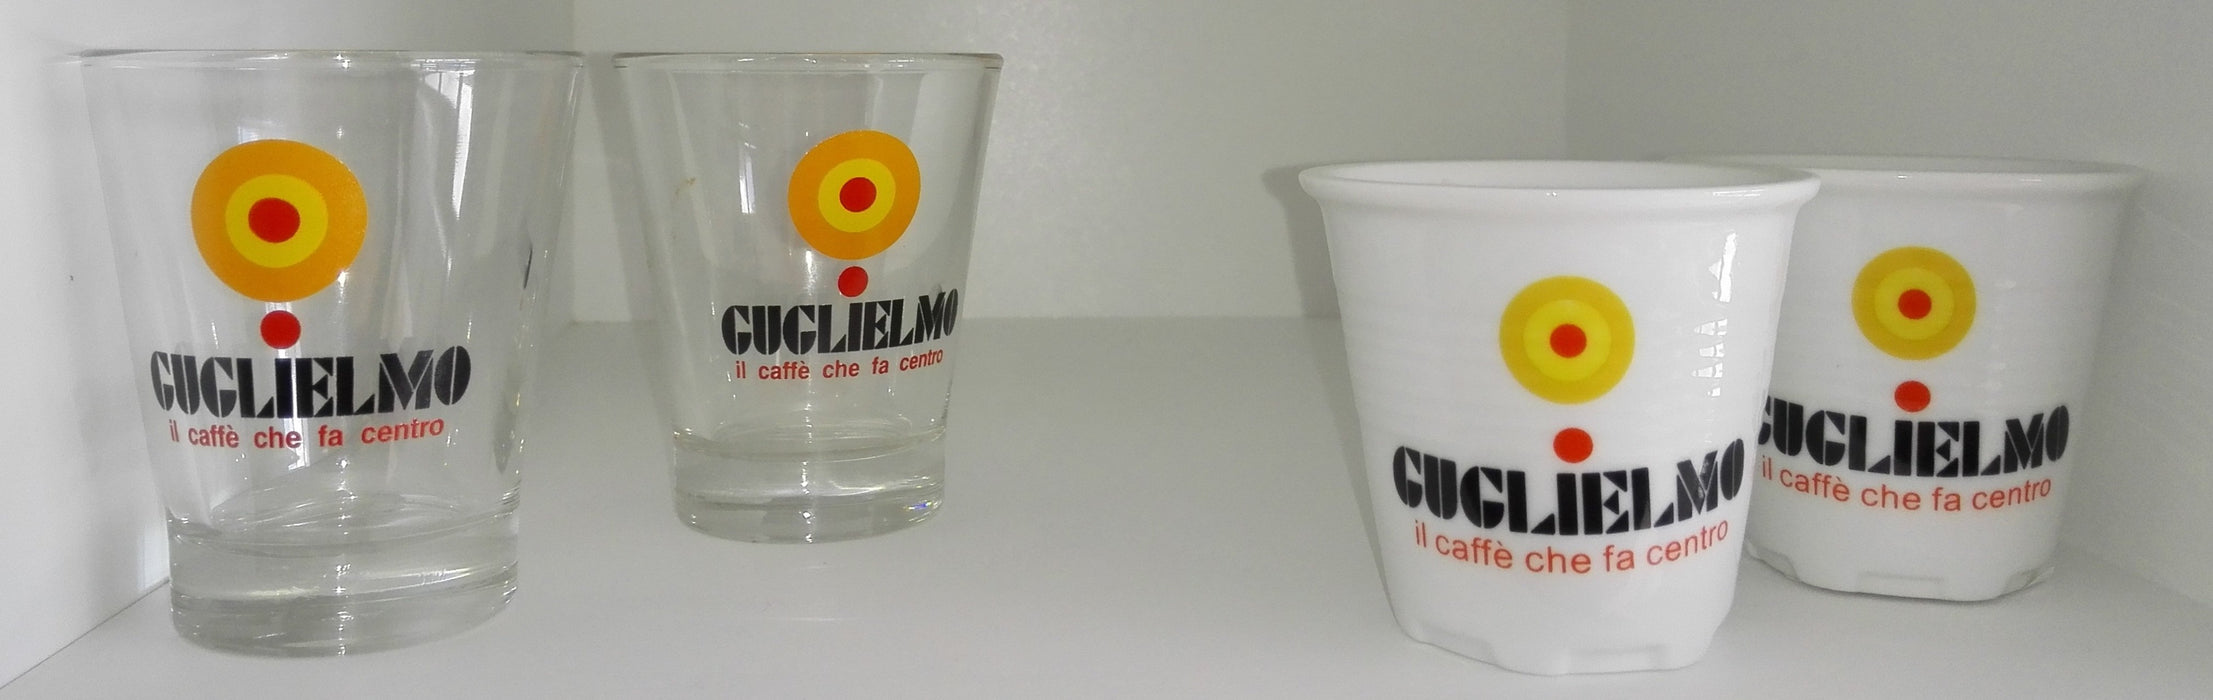 Guglielmo glass coffee cup